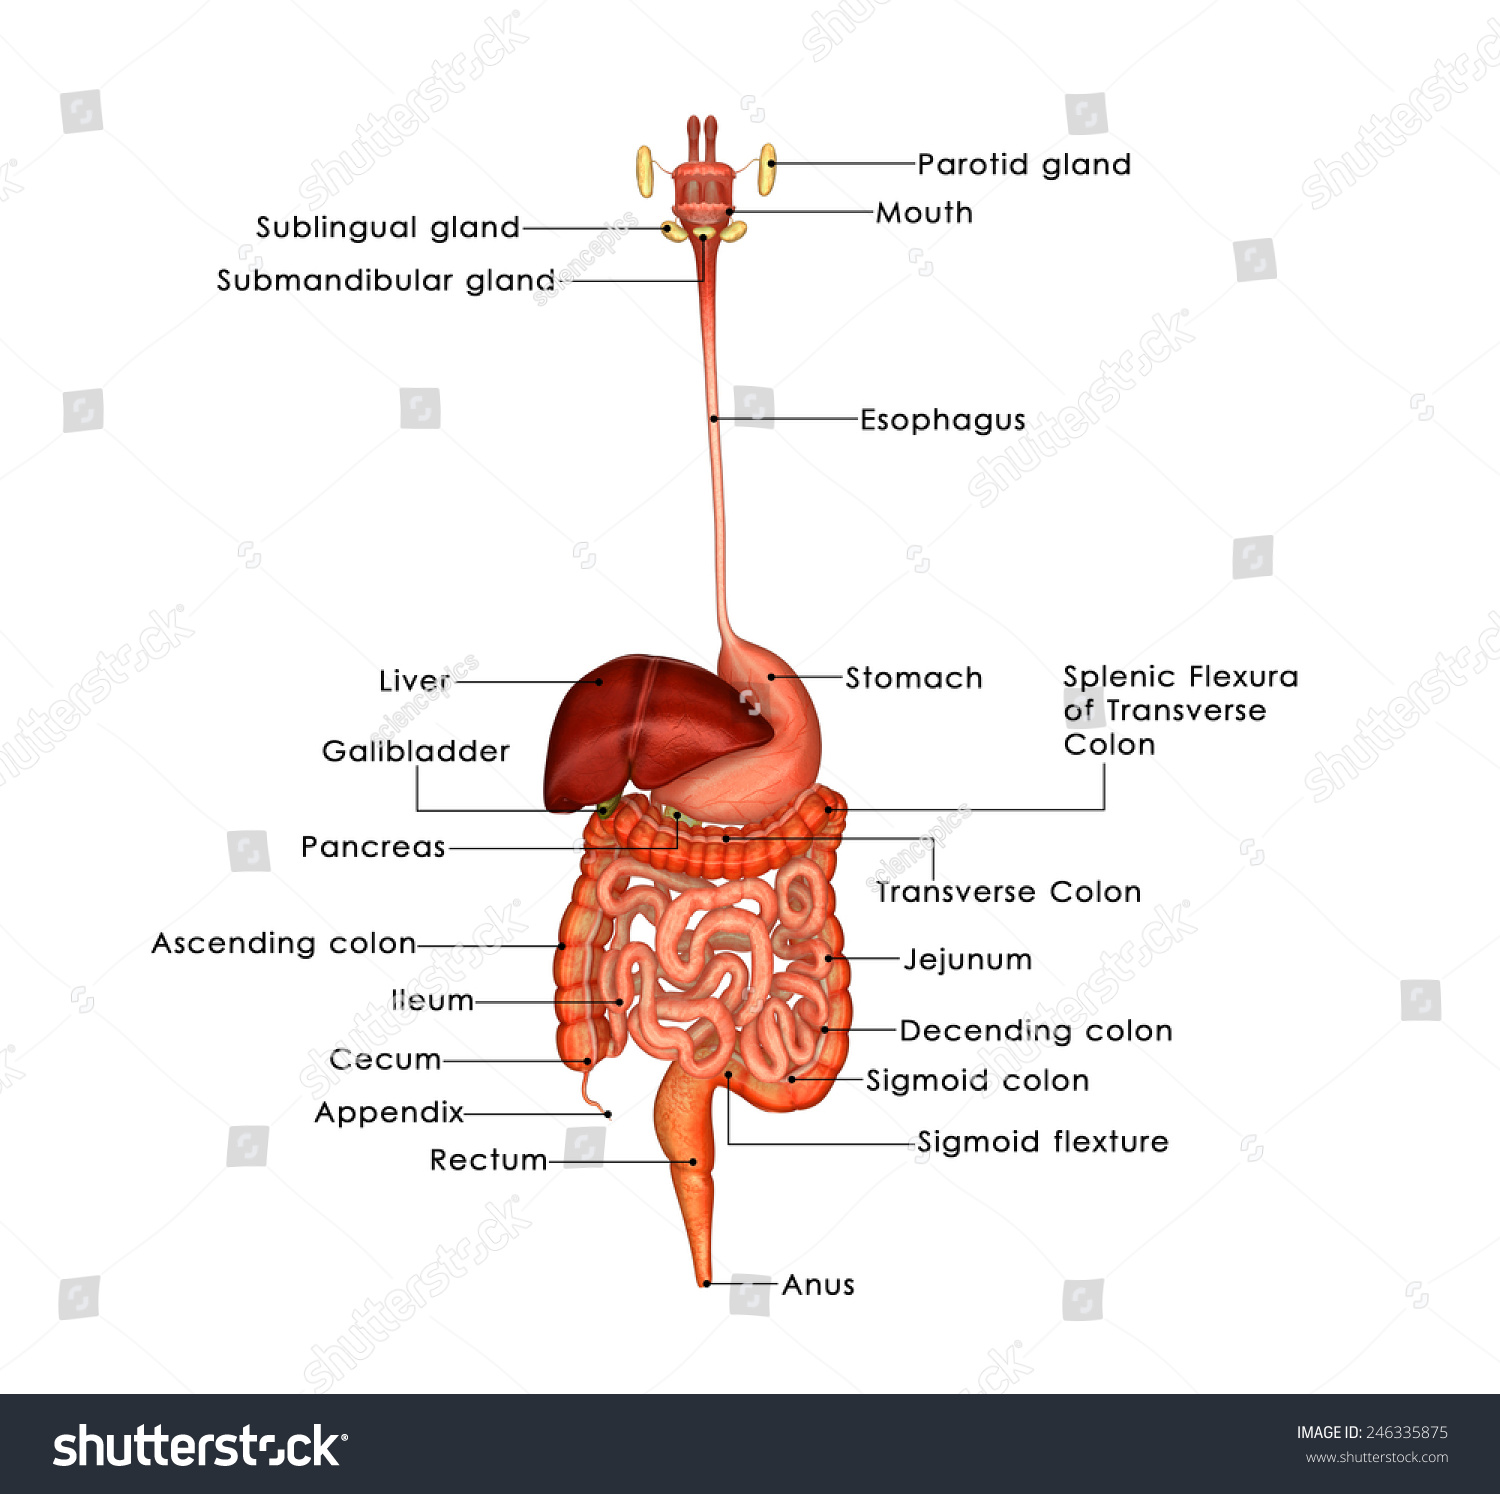 Digestive System Stock Photo 246335875 : Shutterstock